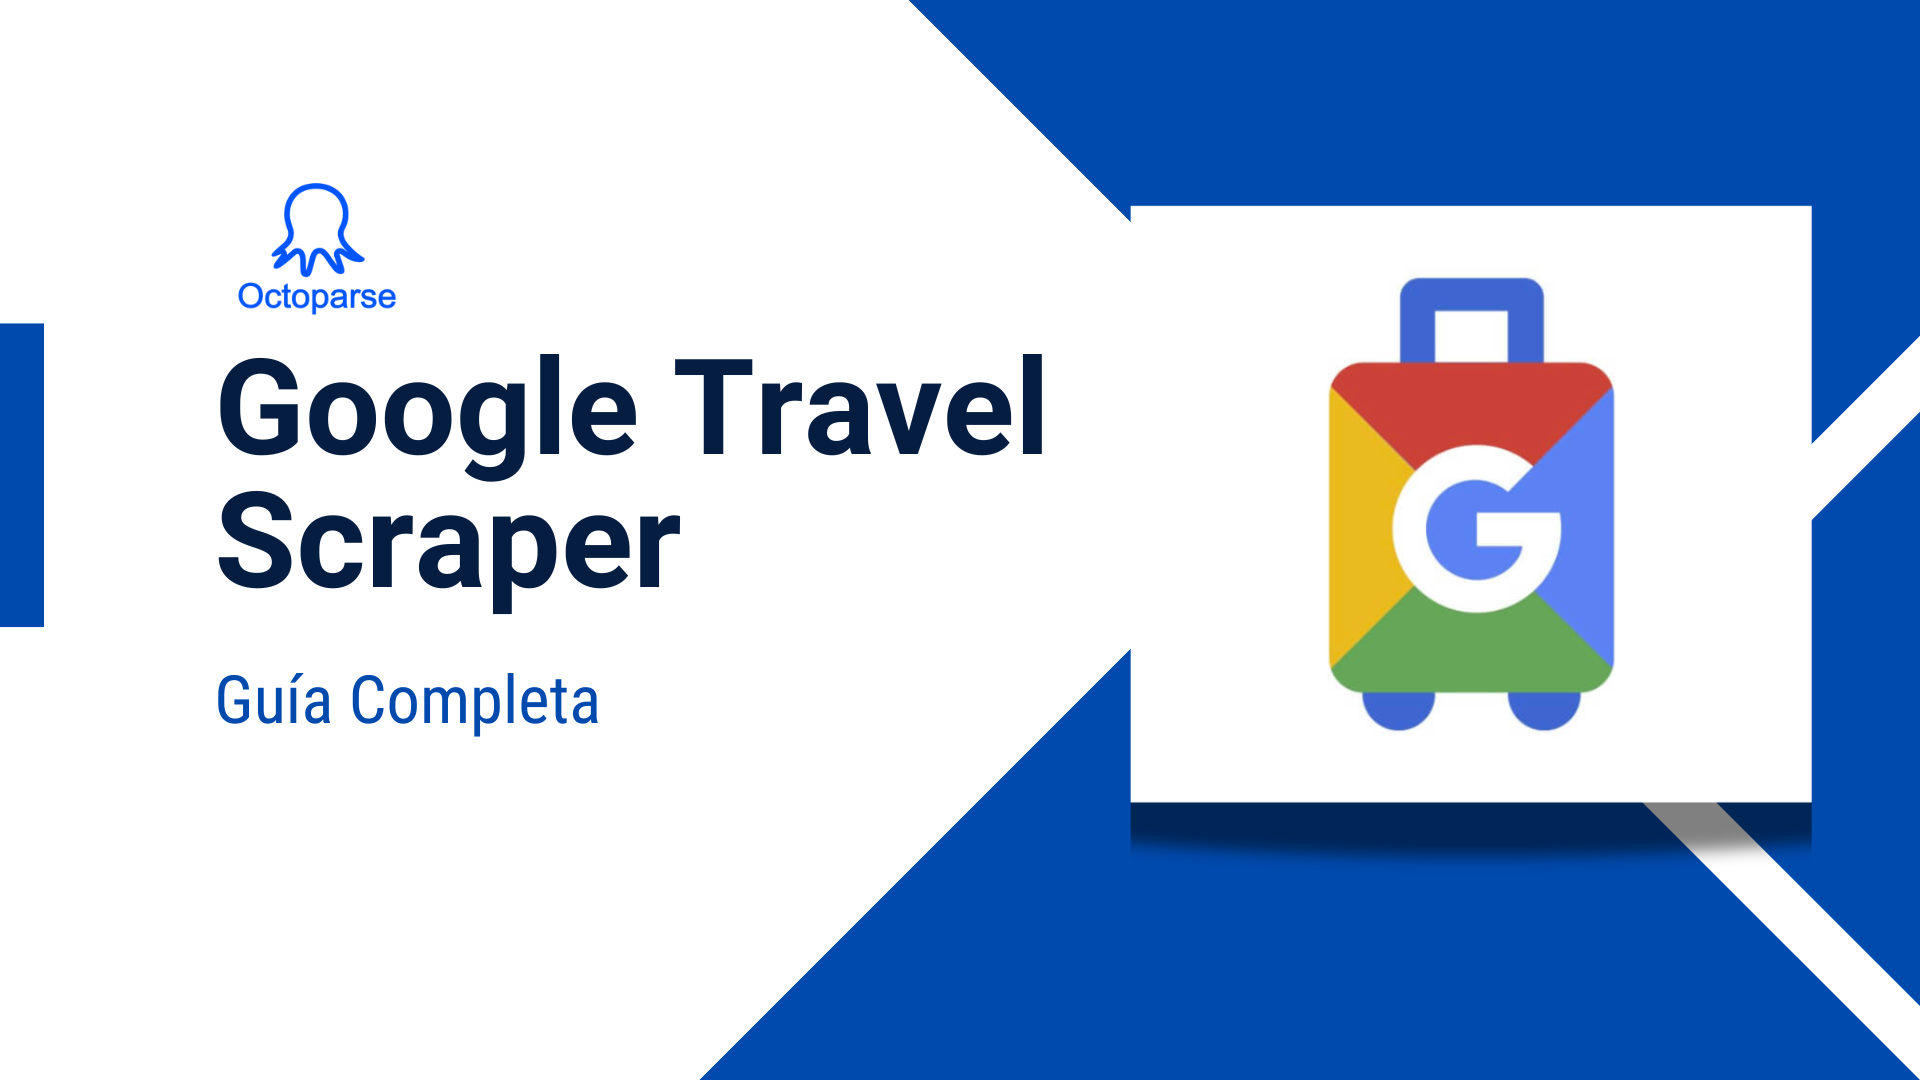 Google Travel Scraper